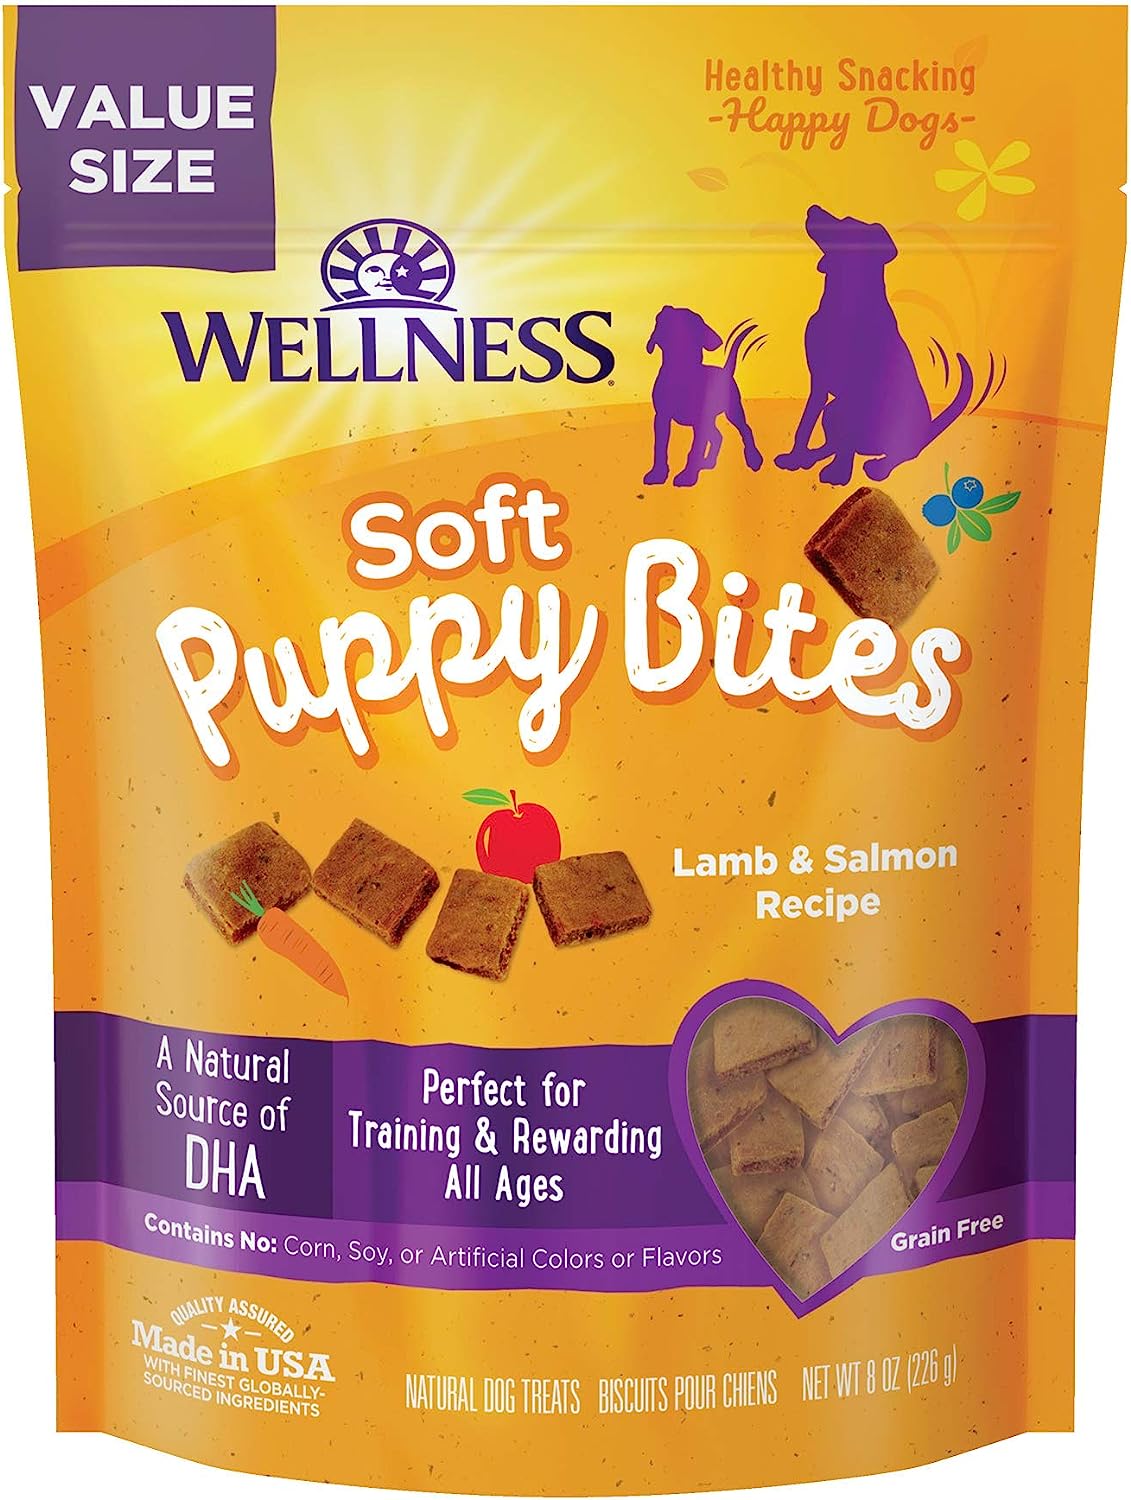 4. Wellness Soft Puppy Bites Natuurlijke graanvrije lekkernijen